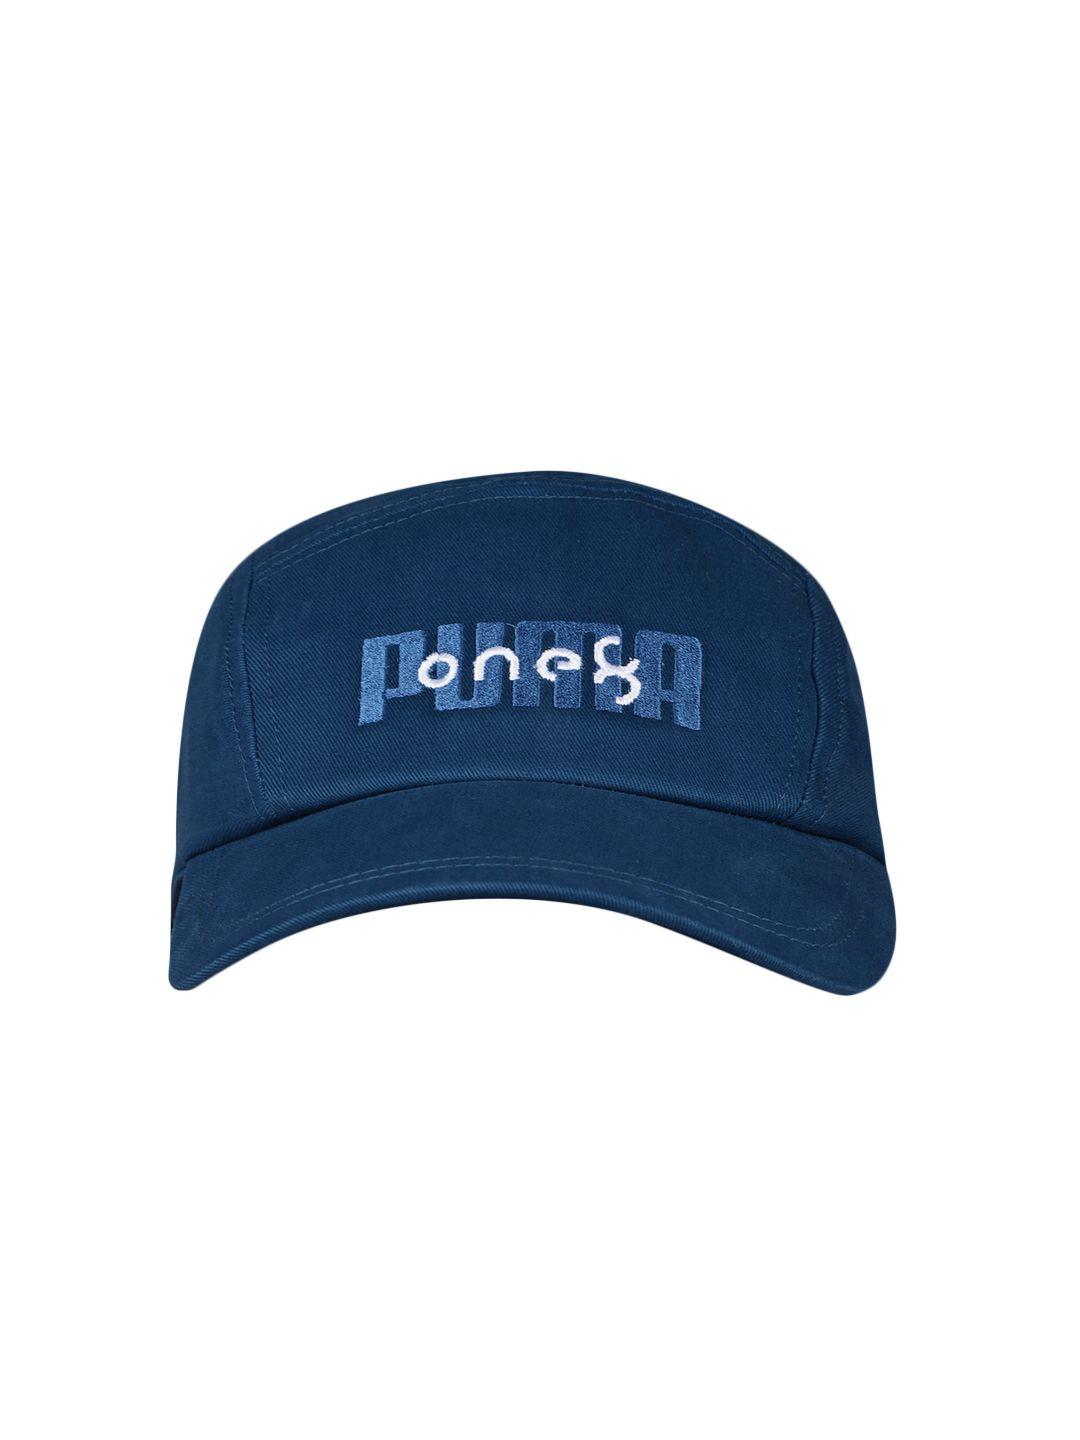 one8 x puma unisex blue brand logo embroidered snapback cap